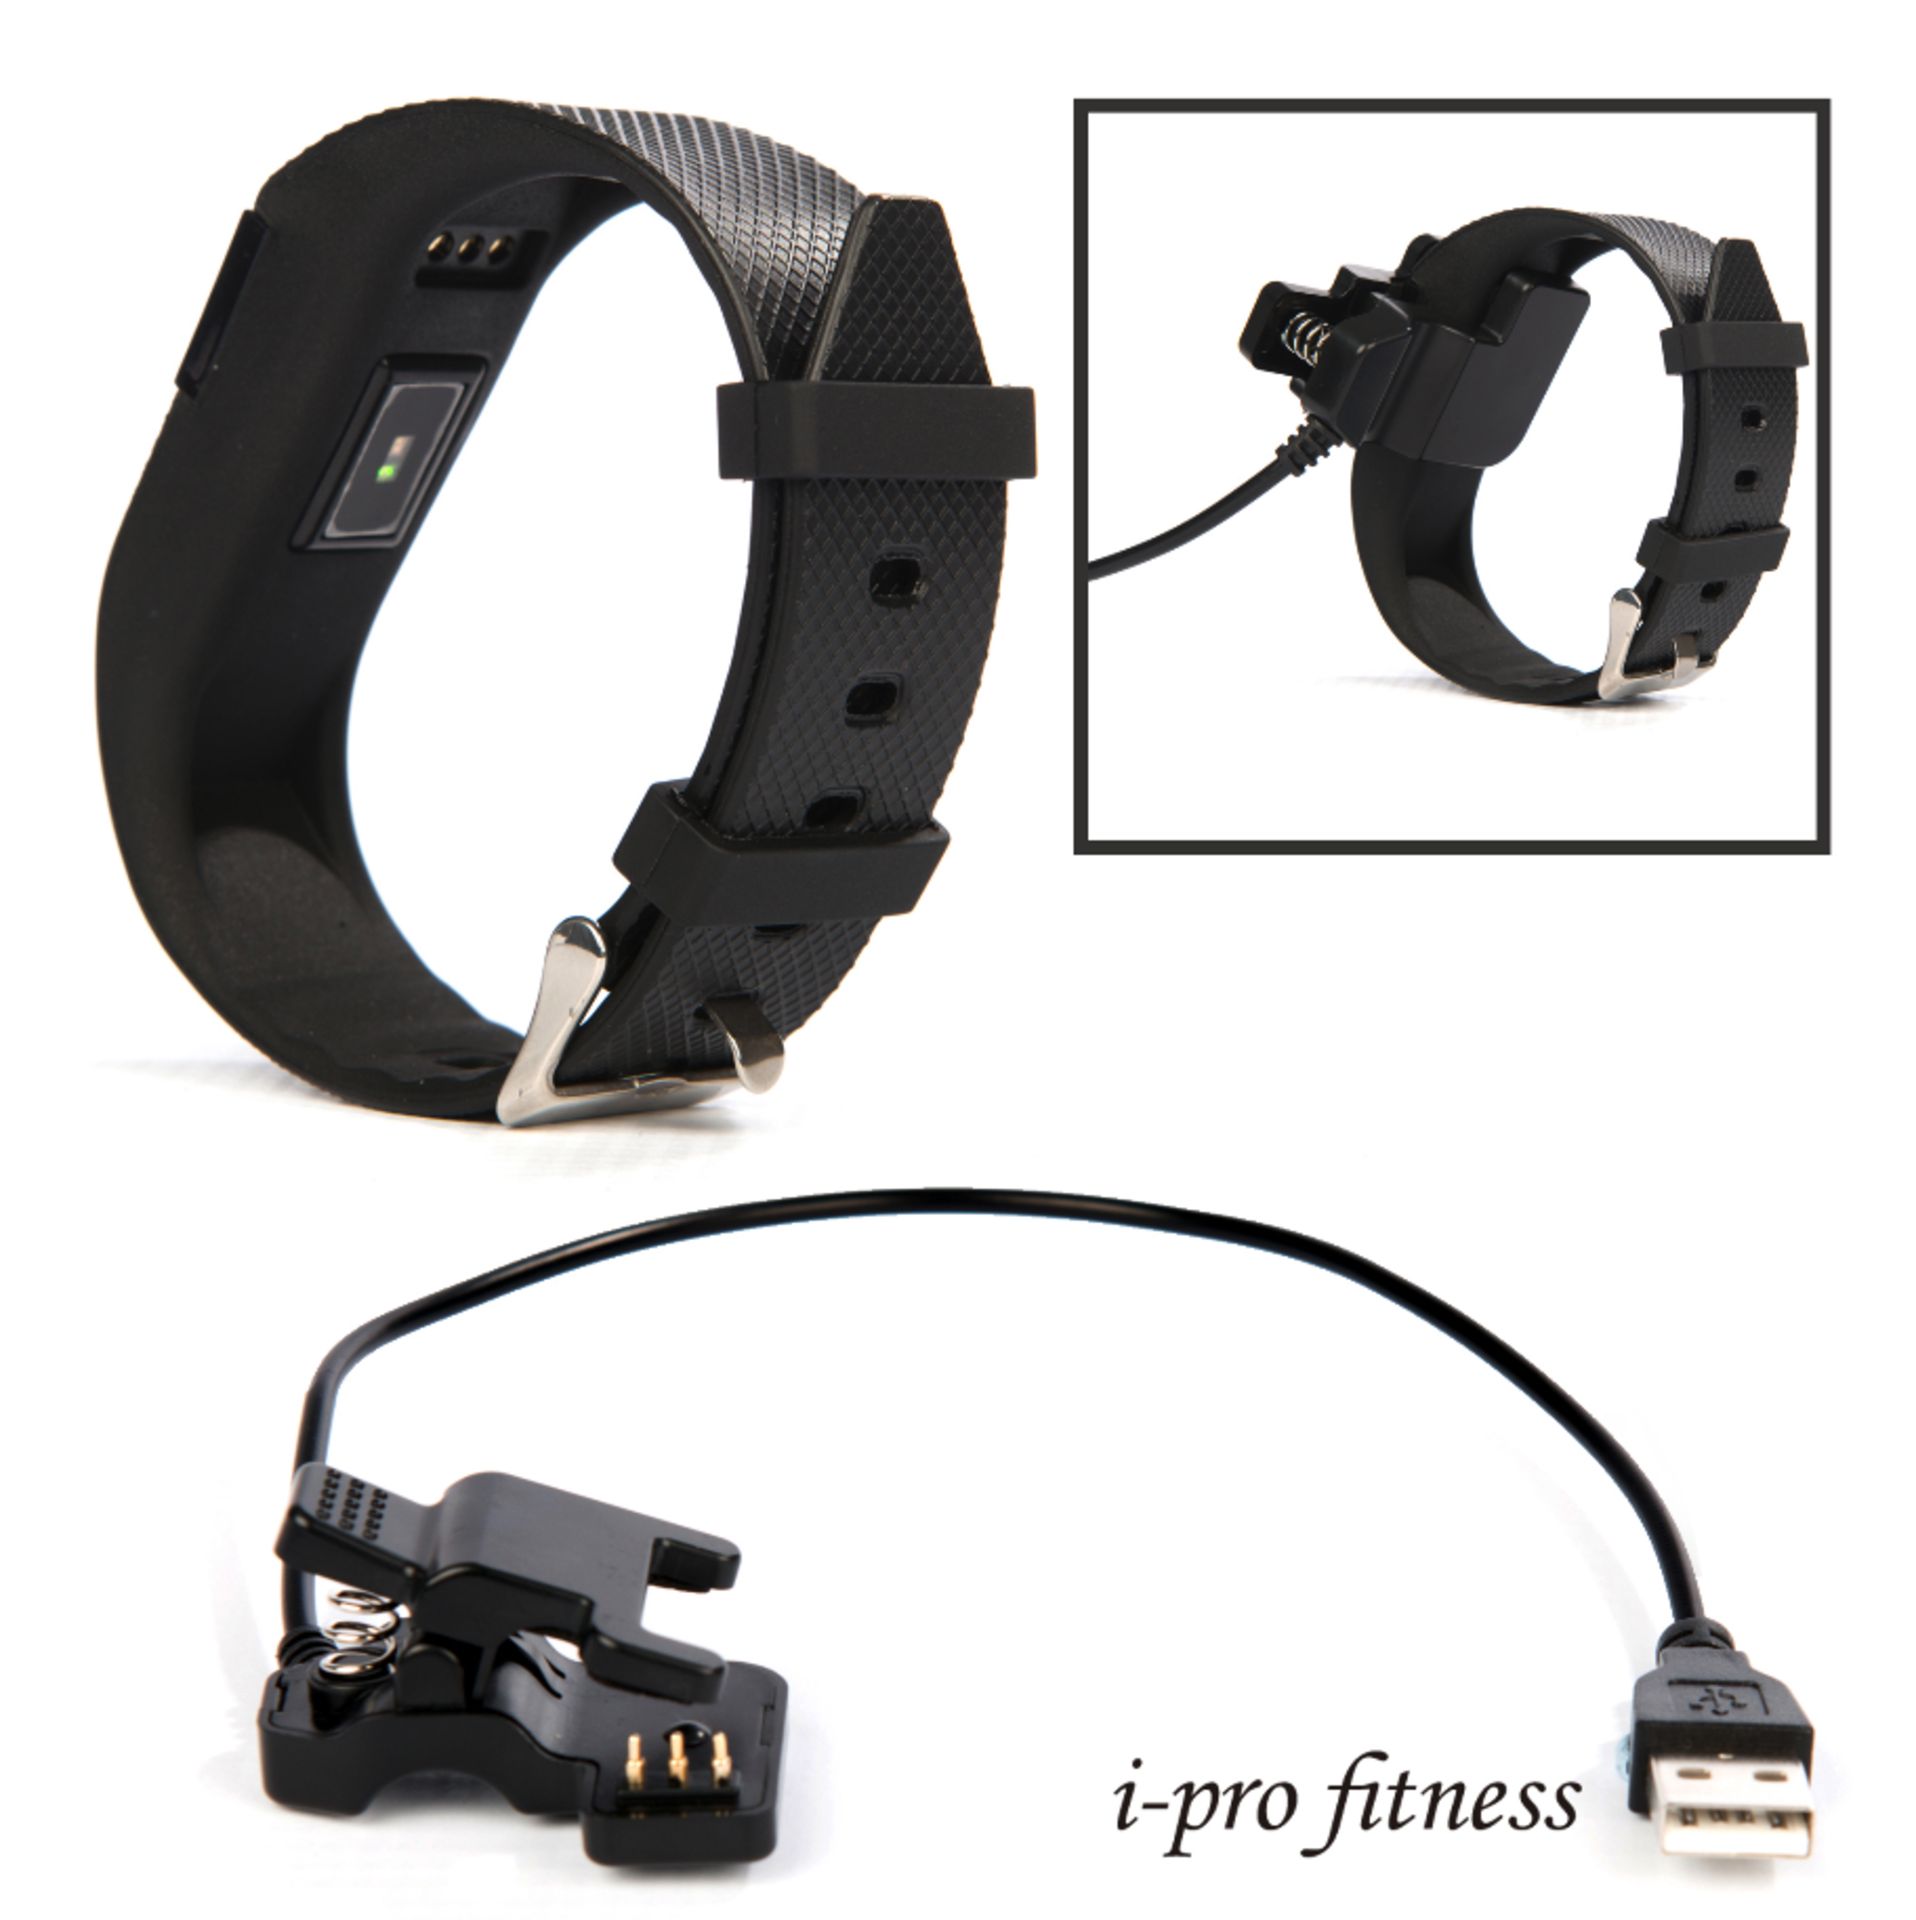 **Trade lot** 50 x Units Fitness Tracker i-pro fitness, Bluetooth 4.0 Sports Smart Bracelet - Image 4 of 8